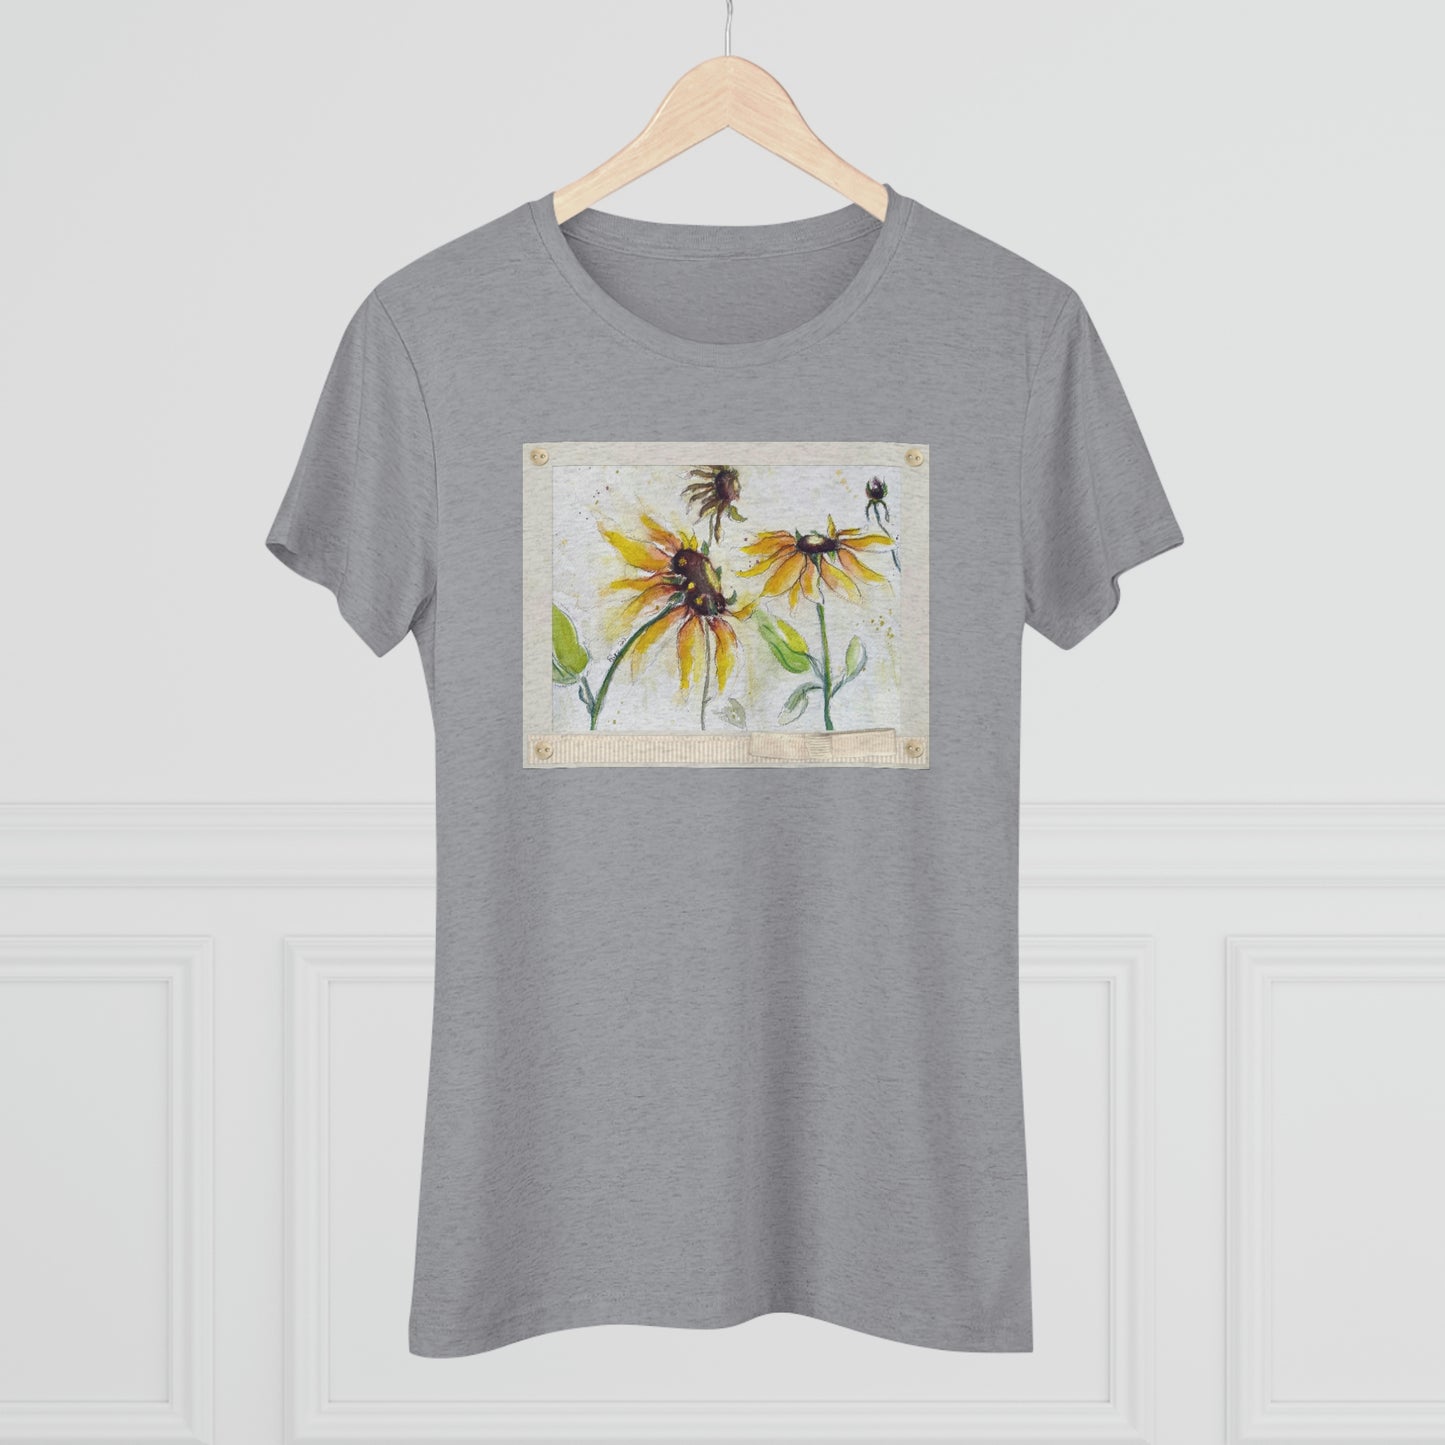 Autumn Sunflowers Women's fitted Triblend Tee  tee shirt